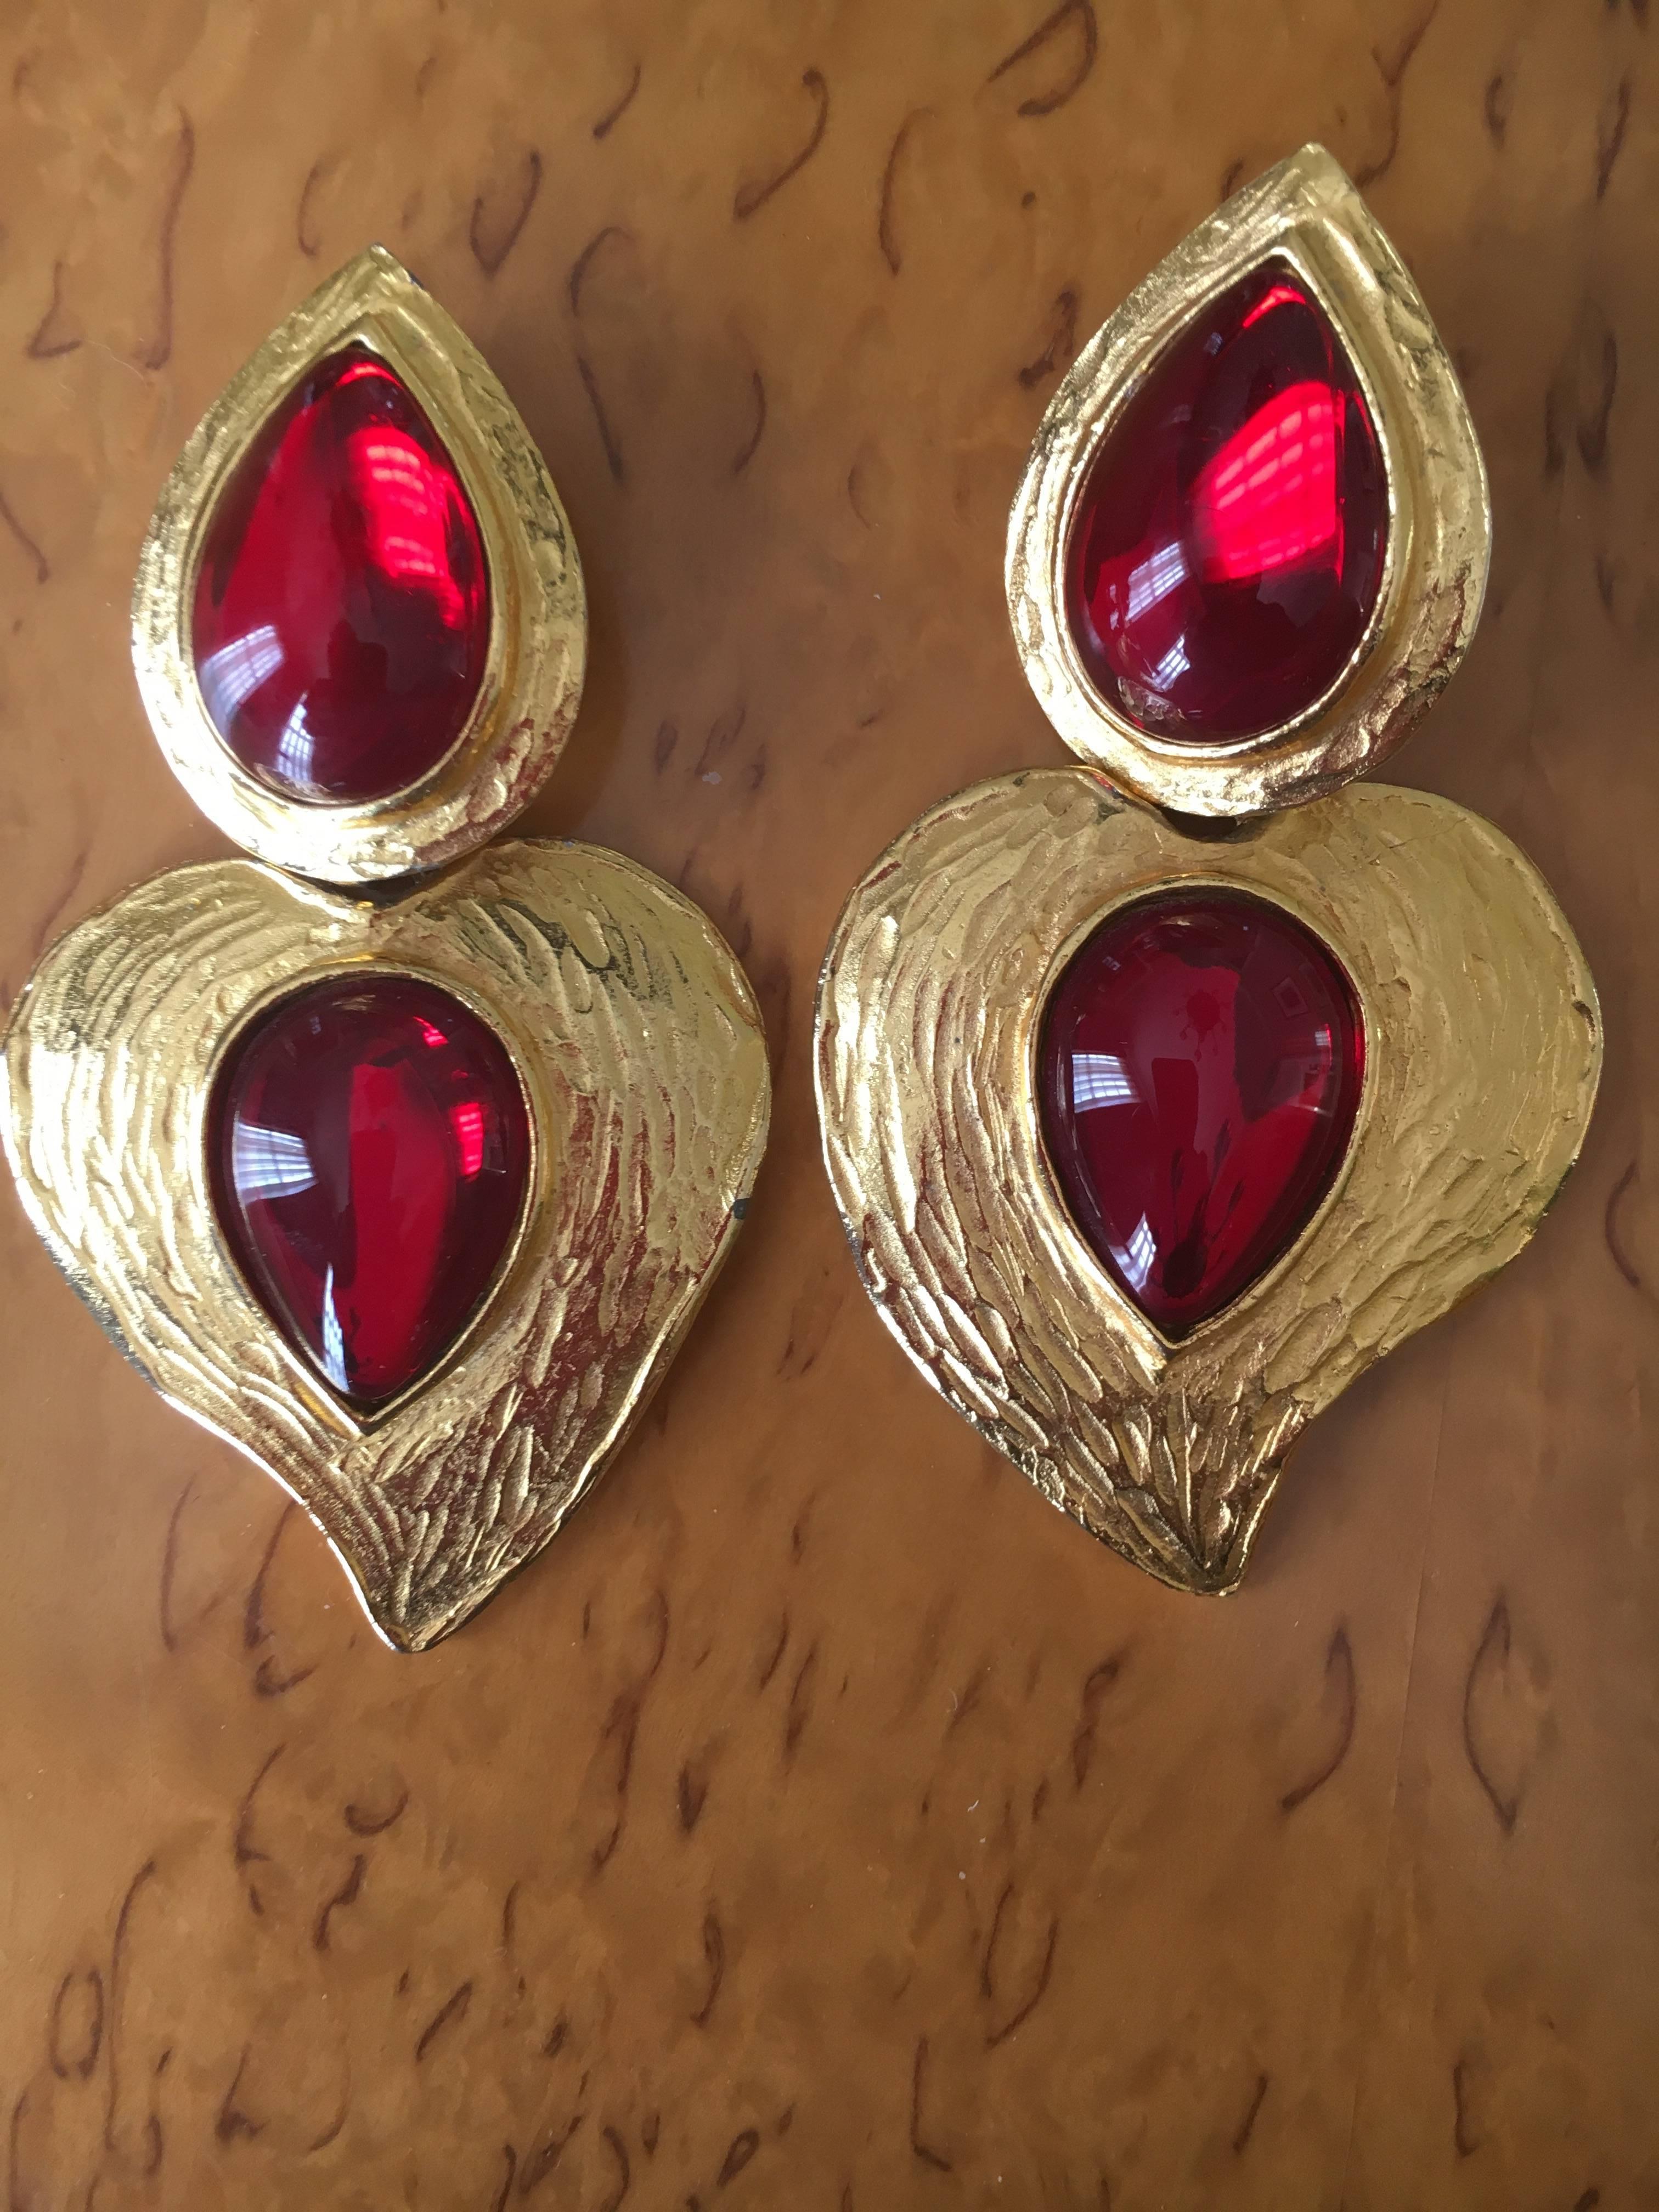 Yves Saint Laurent Rive Gauche 1970's Heart Shape Drop Earrings.
3 1/2" long